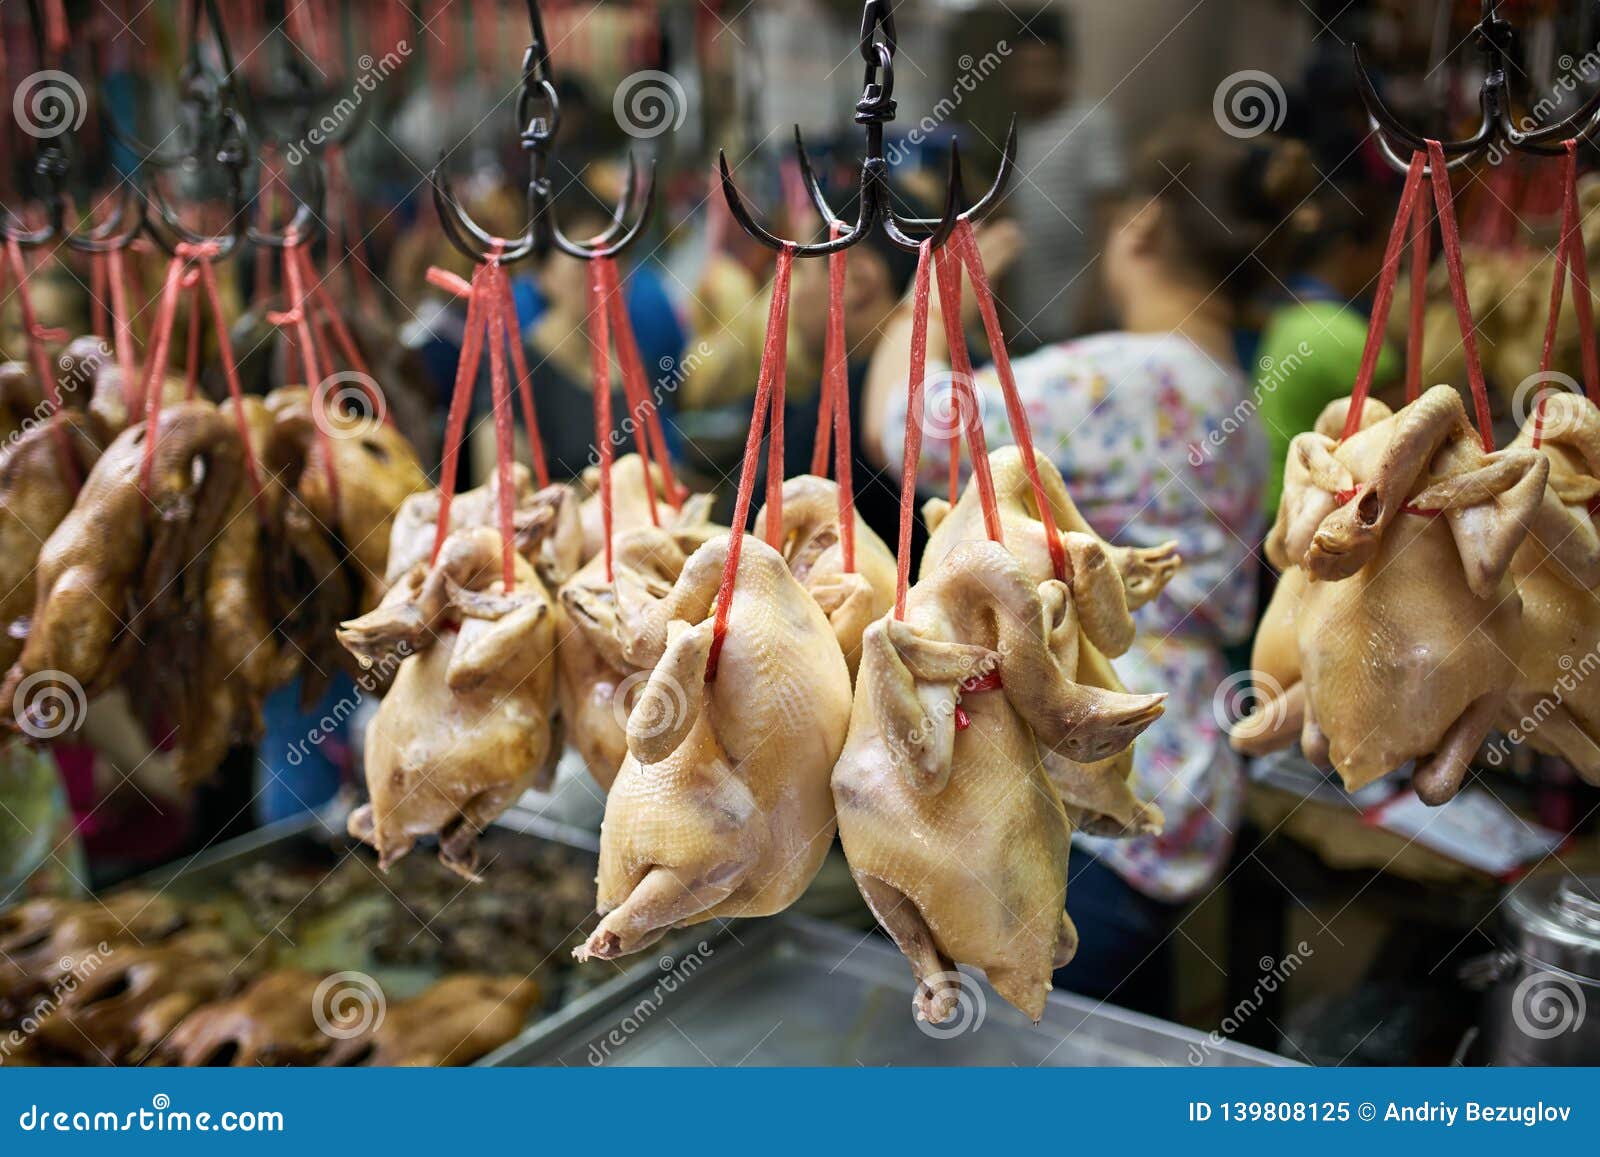 https://thumbs.dreamstime.com/z/lot-chicken-bodies-hanging-red-ropes-black-hooks-over-chrome-trays-blurred-background-street-market-bangkok-139808125.jpg